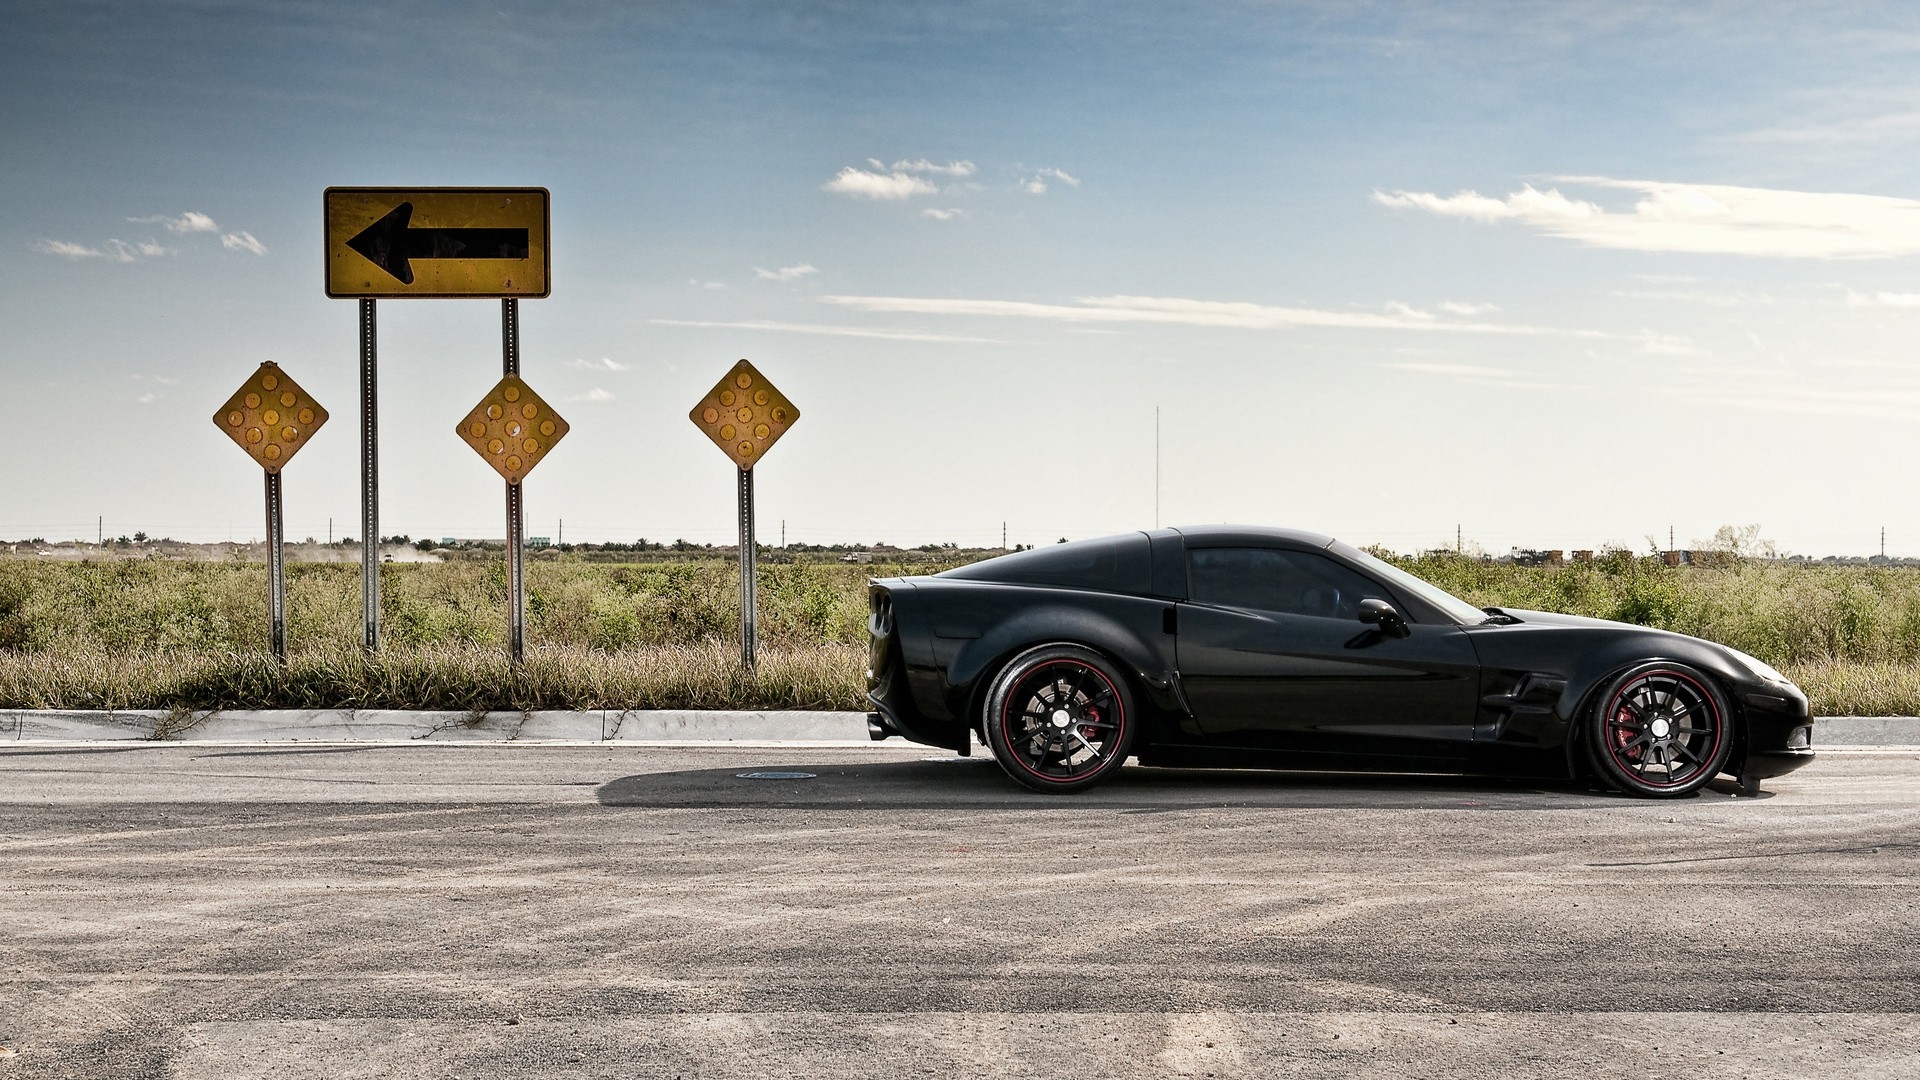 Wallpaper Road Traffic Auto Black Corvette Full HD 1080p